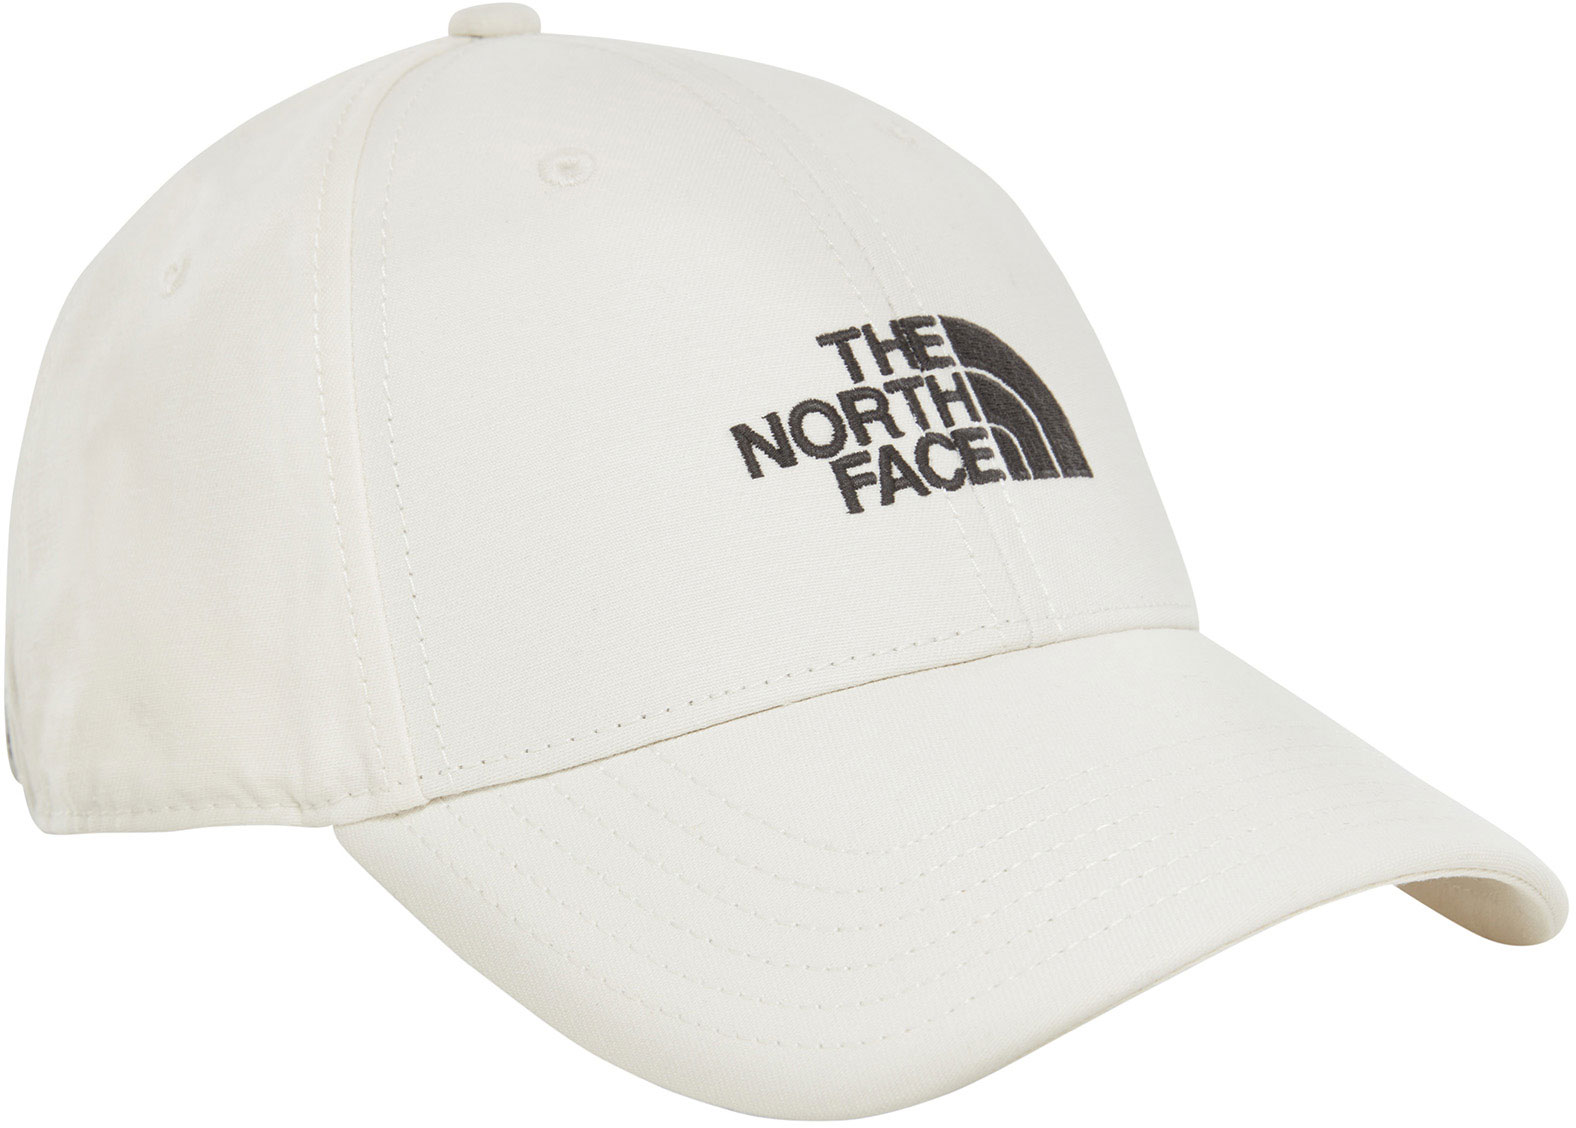 The North Face 66 Classic Hat Sportisimo Com